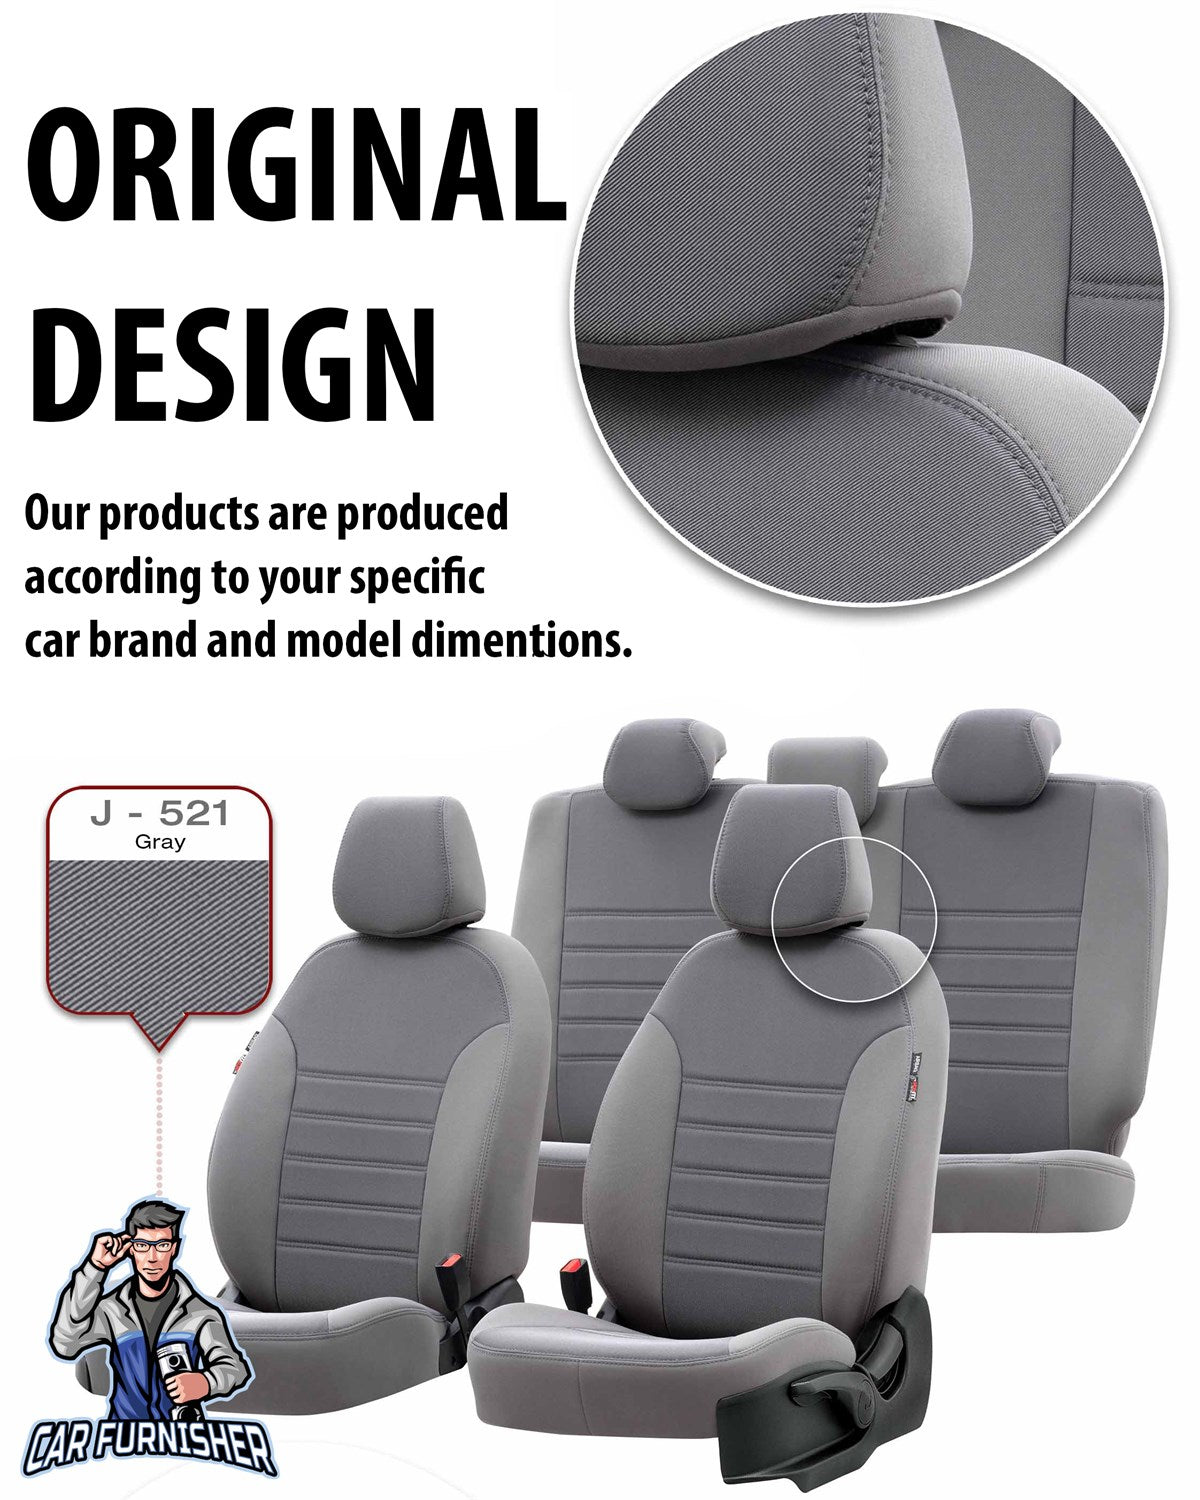 Landrover Freelander Car Seat Covers 1998-2012 Original Design Dark Beige Jacquard Fabric